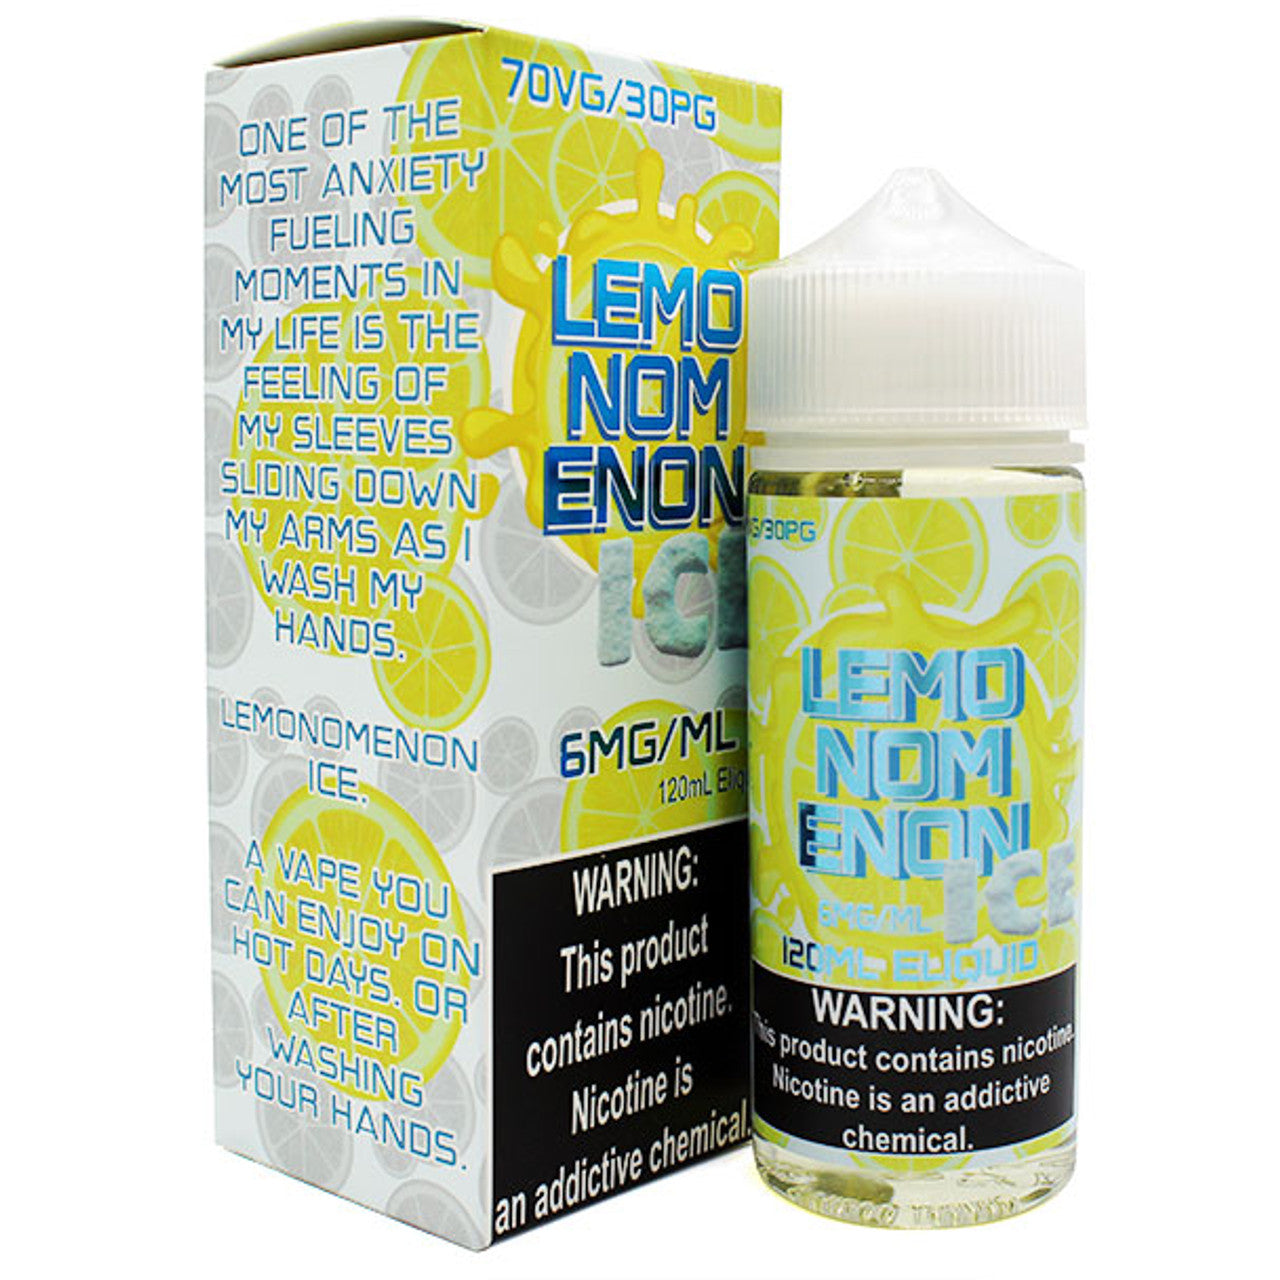 Lemonomenon ICE by Nomenon 120ml 6MG